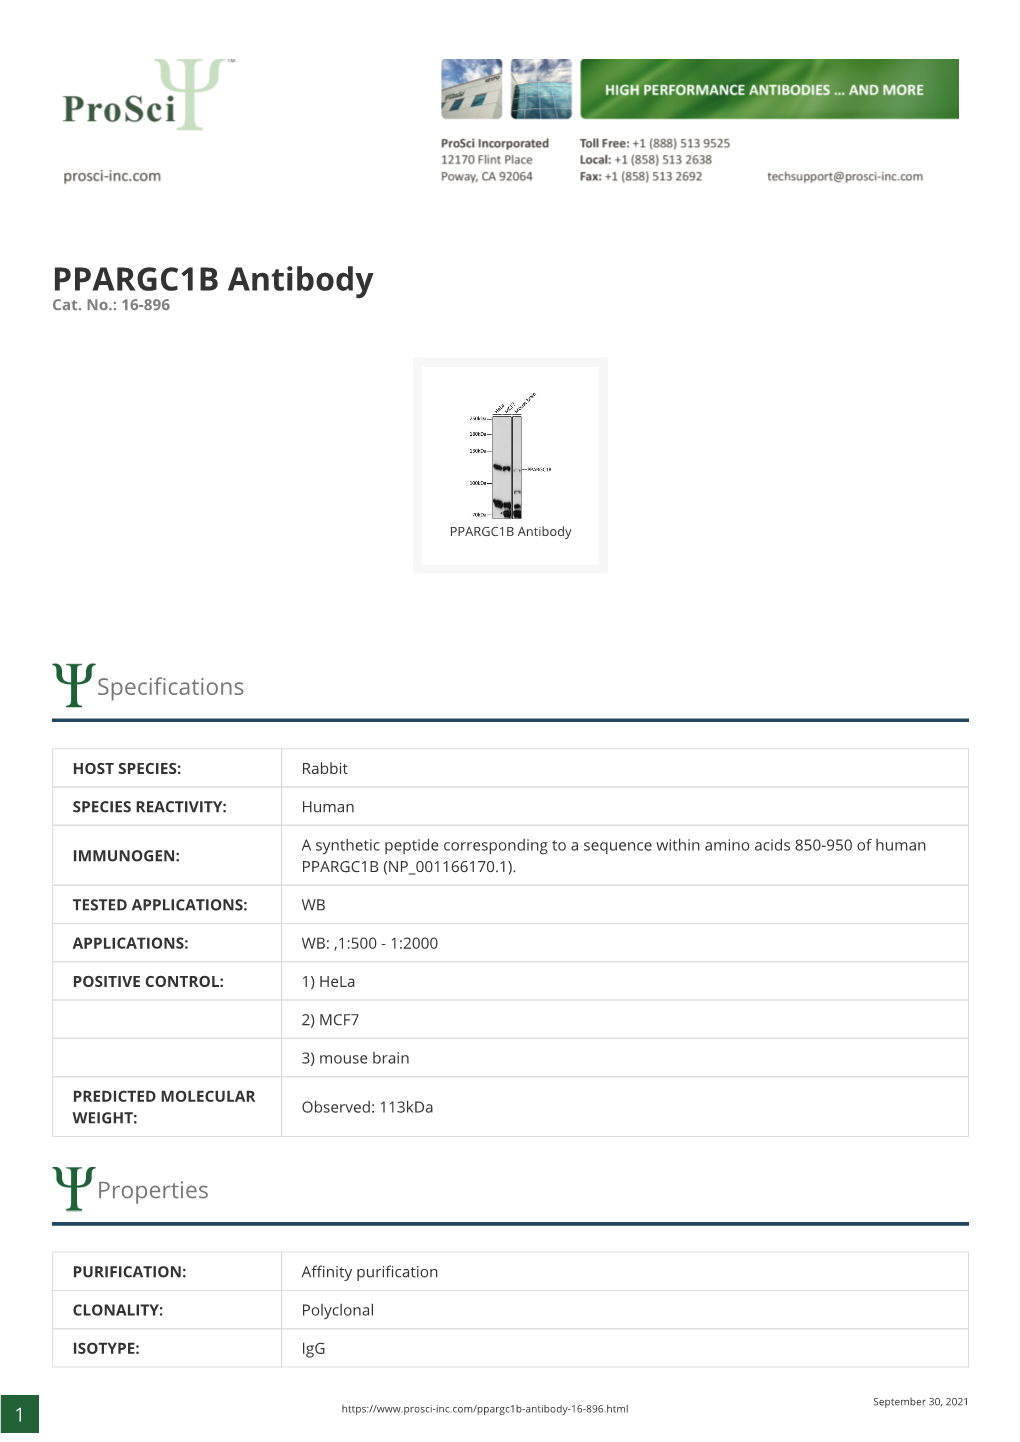 PPARGC1B Antibody Cat